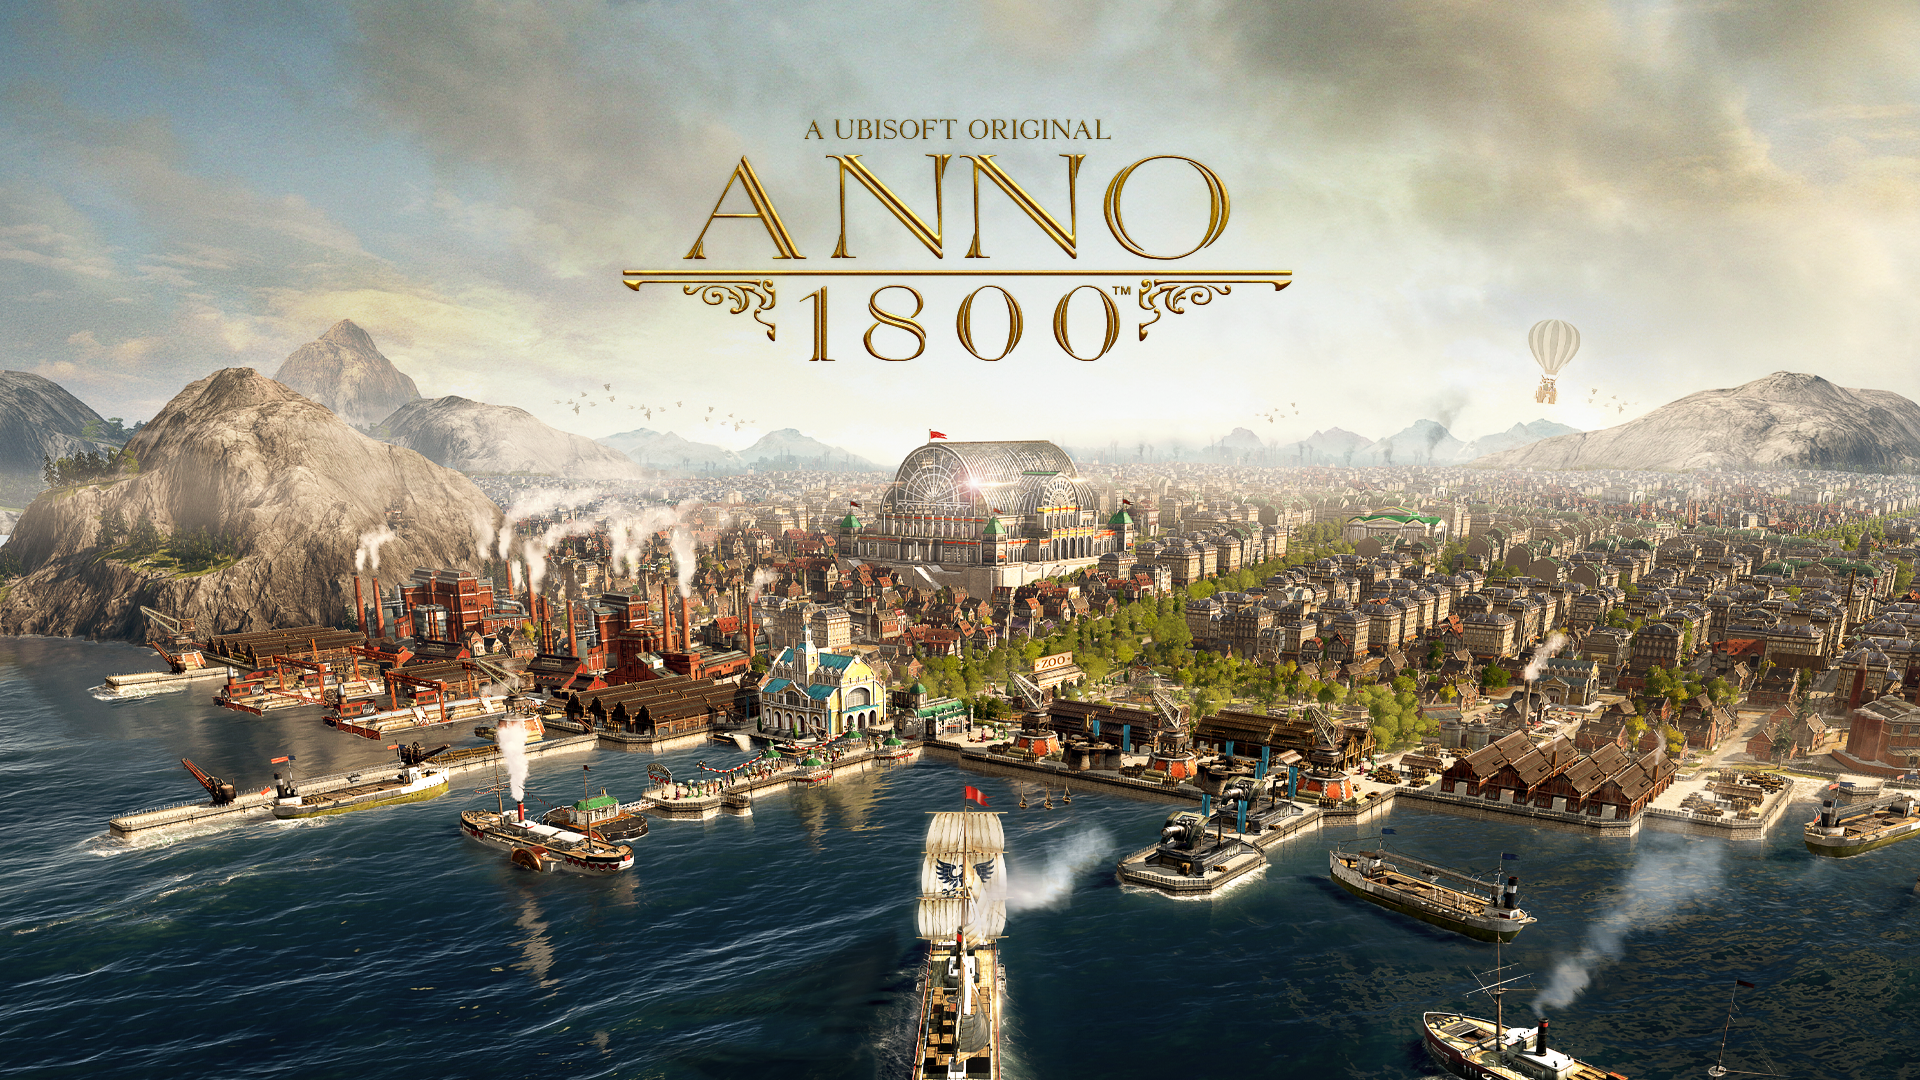 Anno 1800 PC Game Latest Version Free Download